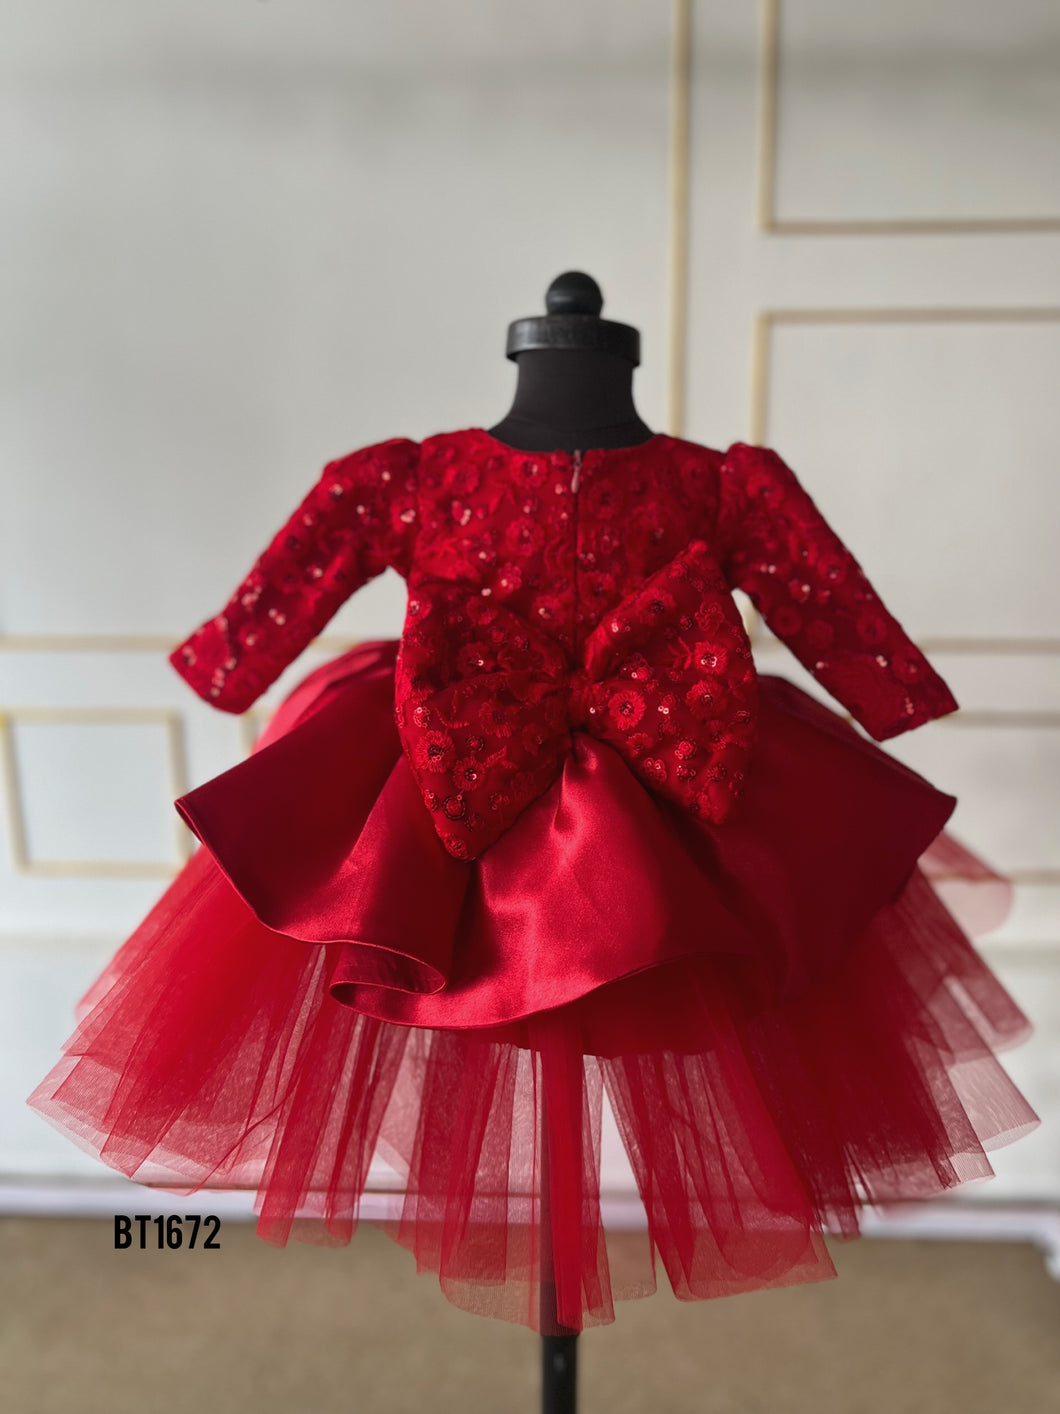 BT1672 Crimson Sequin Dream Dress - Sparkling Delight for Tiny Dancers